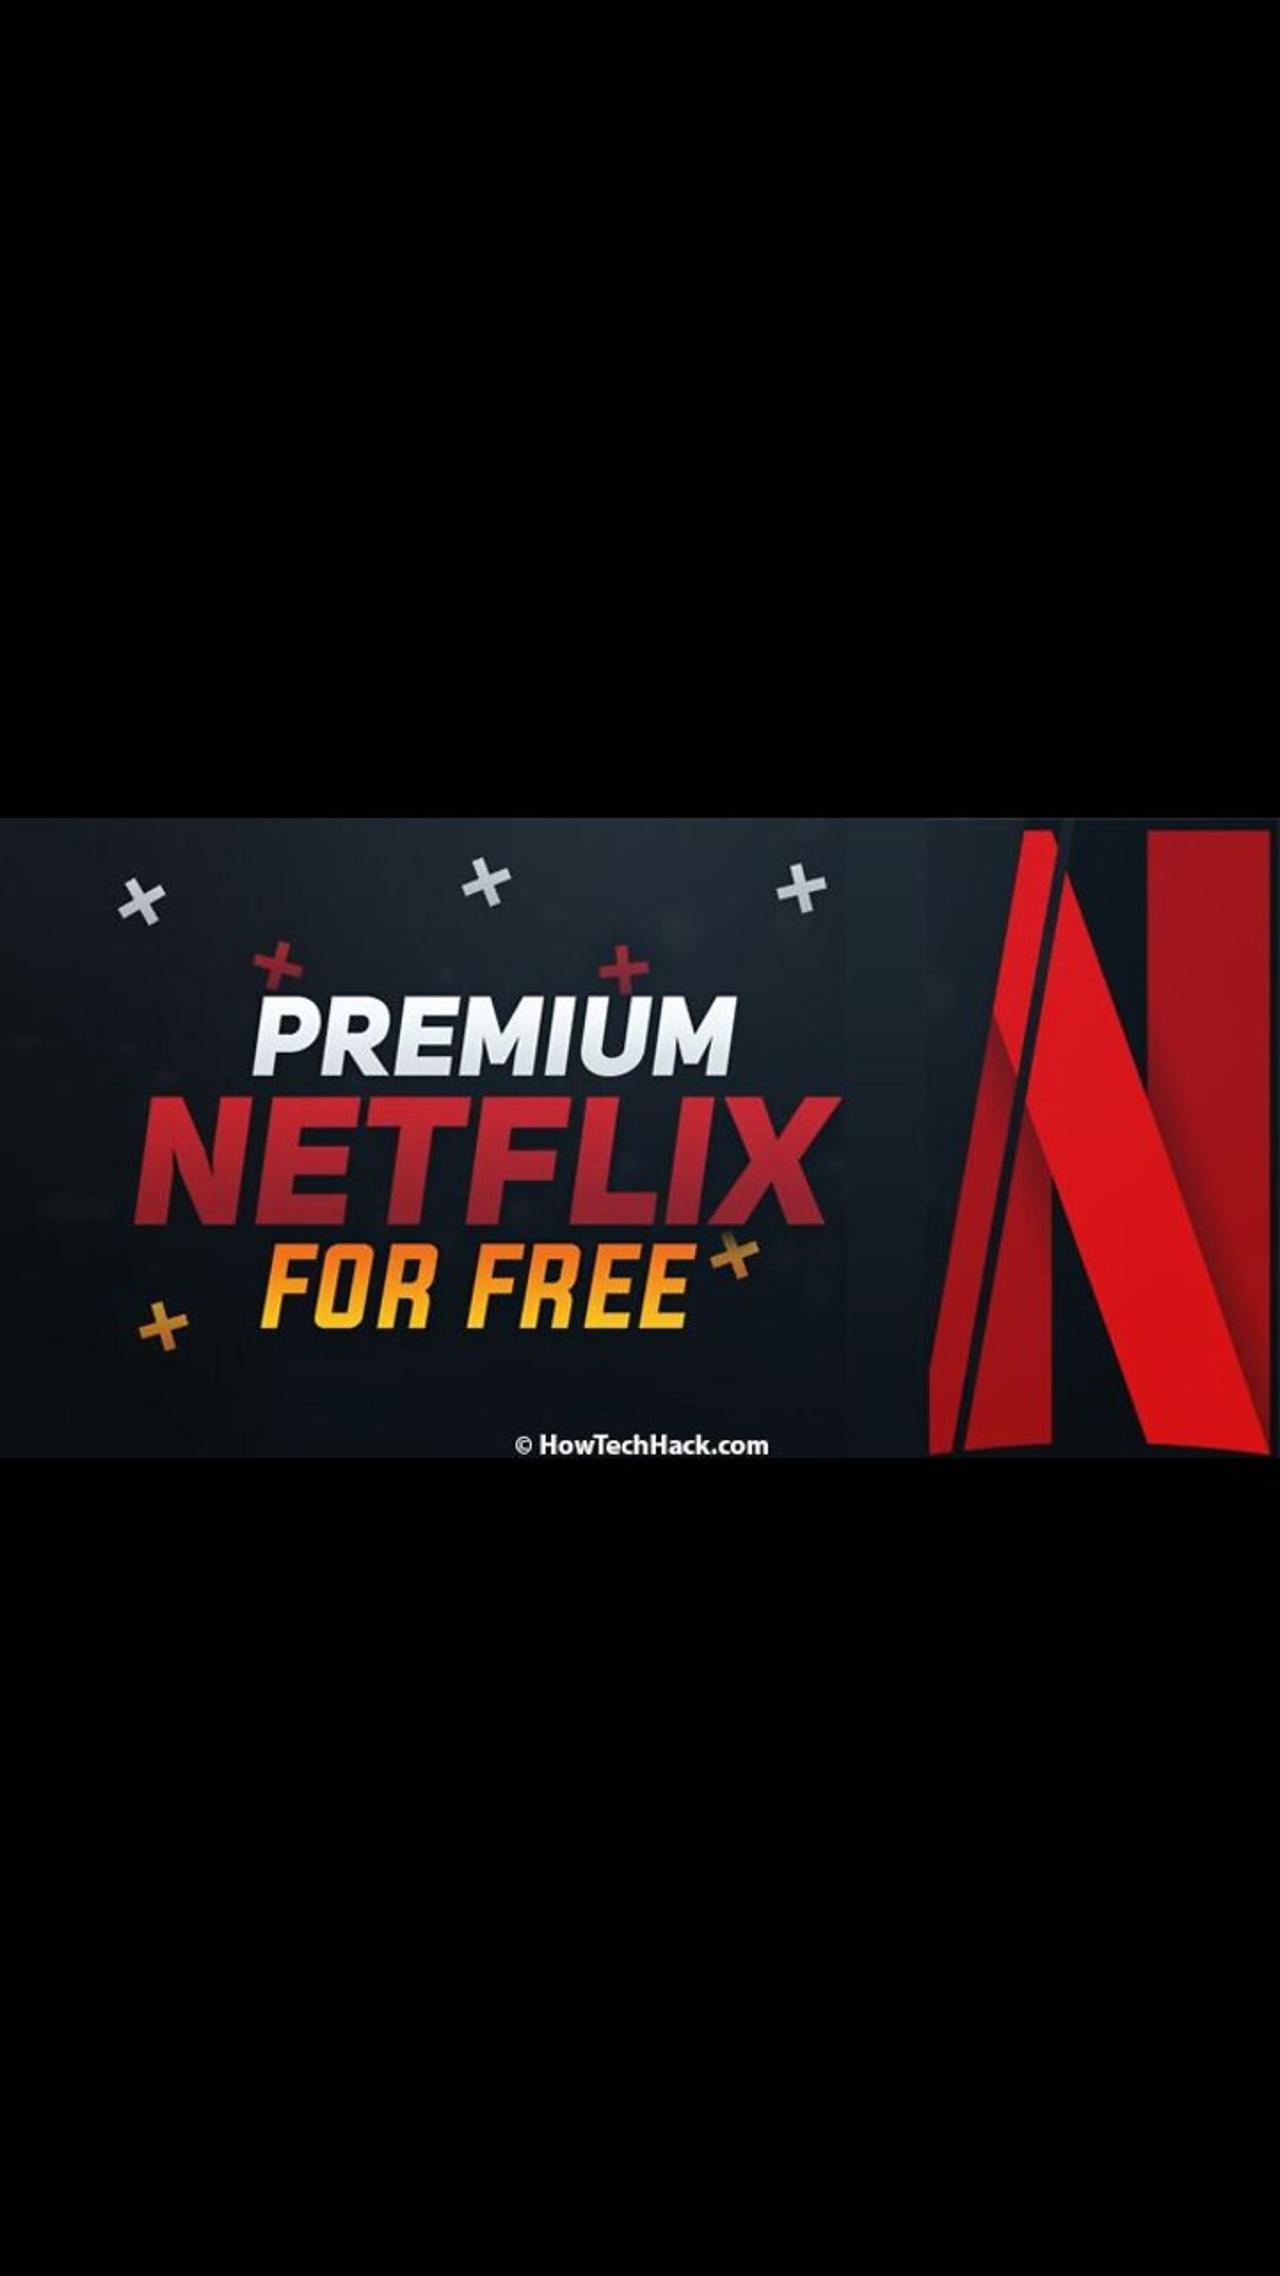 how to get netflix premium free | watch netflex for free